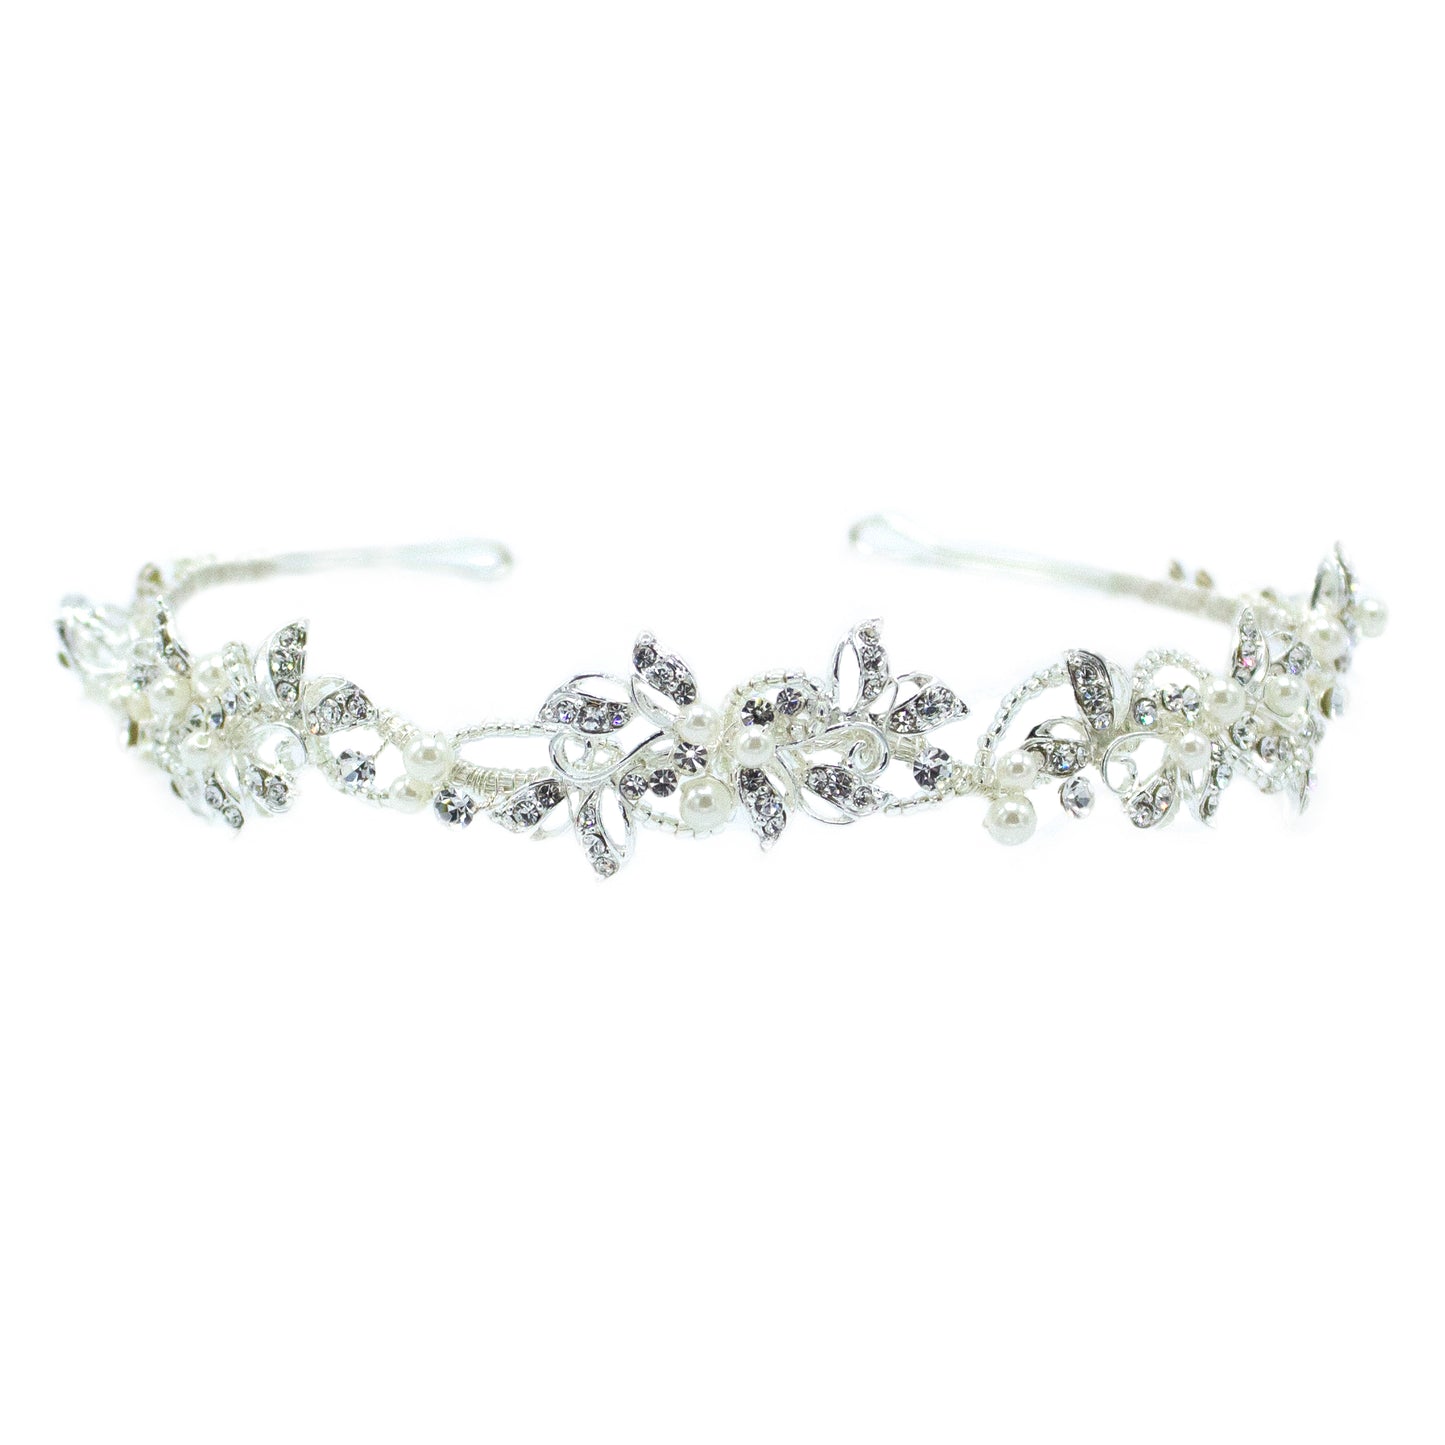 Spring - Silver Floral Crystal Patterned Headband